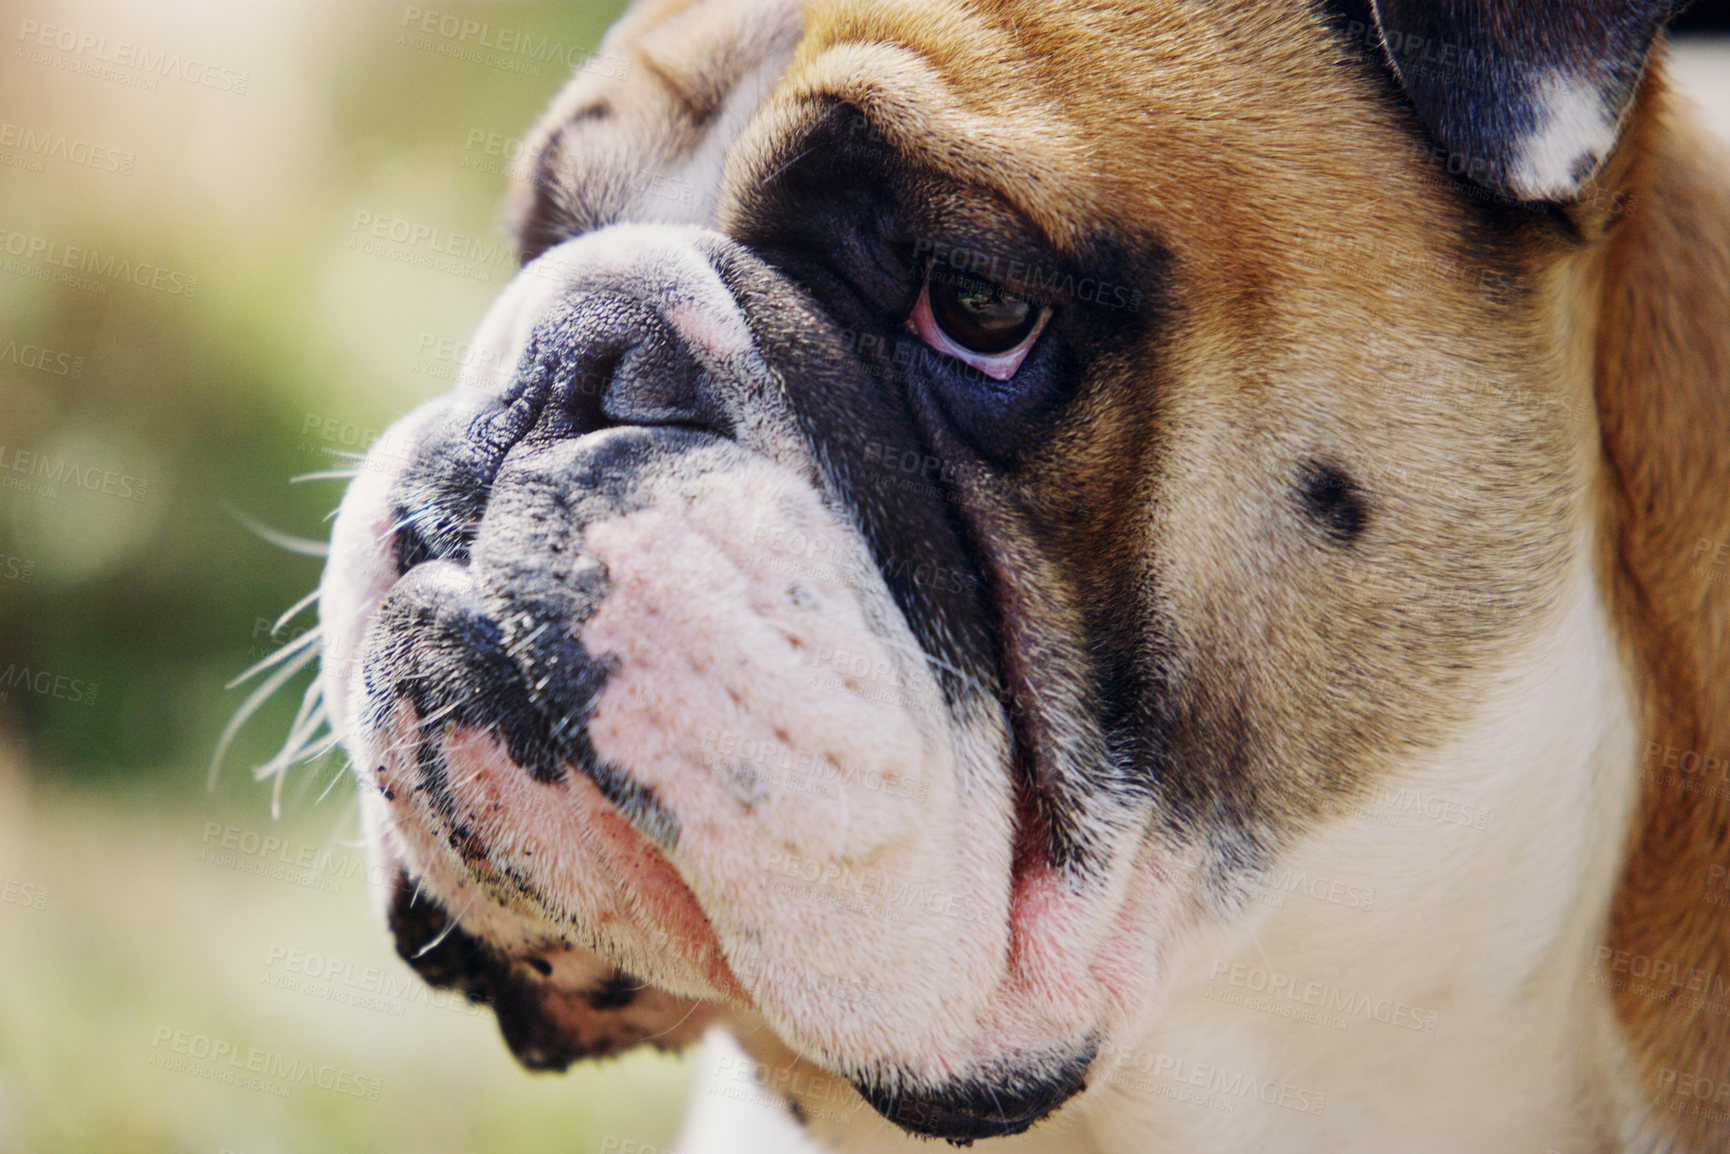 Buy stock photo Closeup shot of a bulldog outdoors